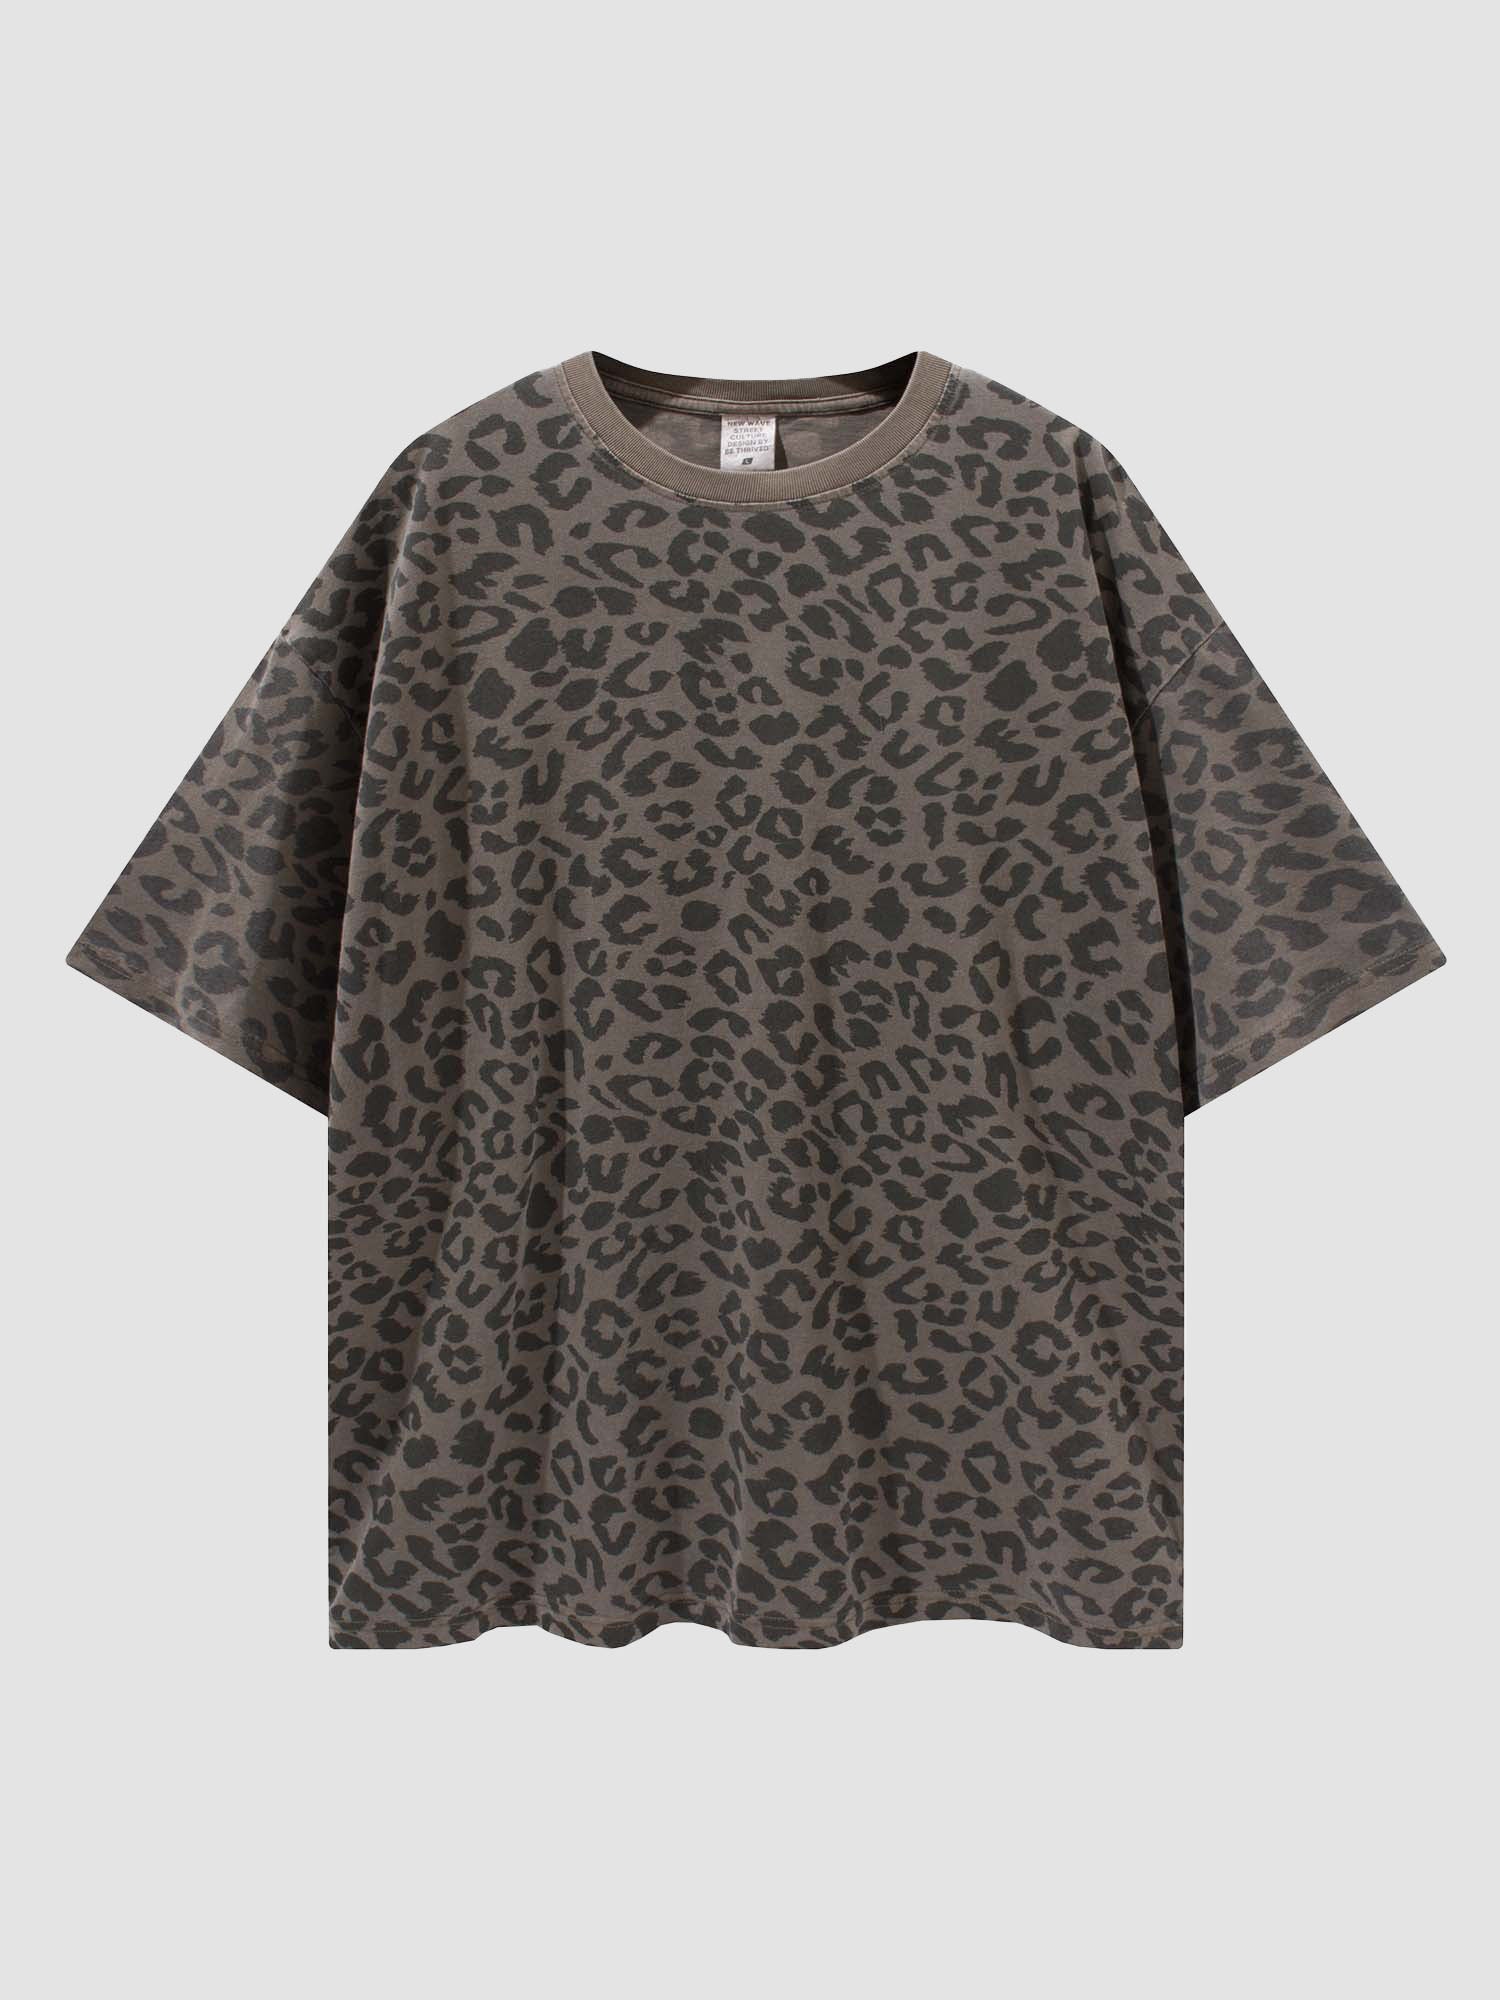 JUSTNOTAG DarkGray leopard Print 100% Cotton Short Sleeve Tee